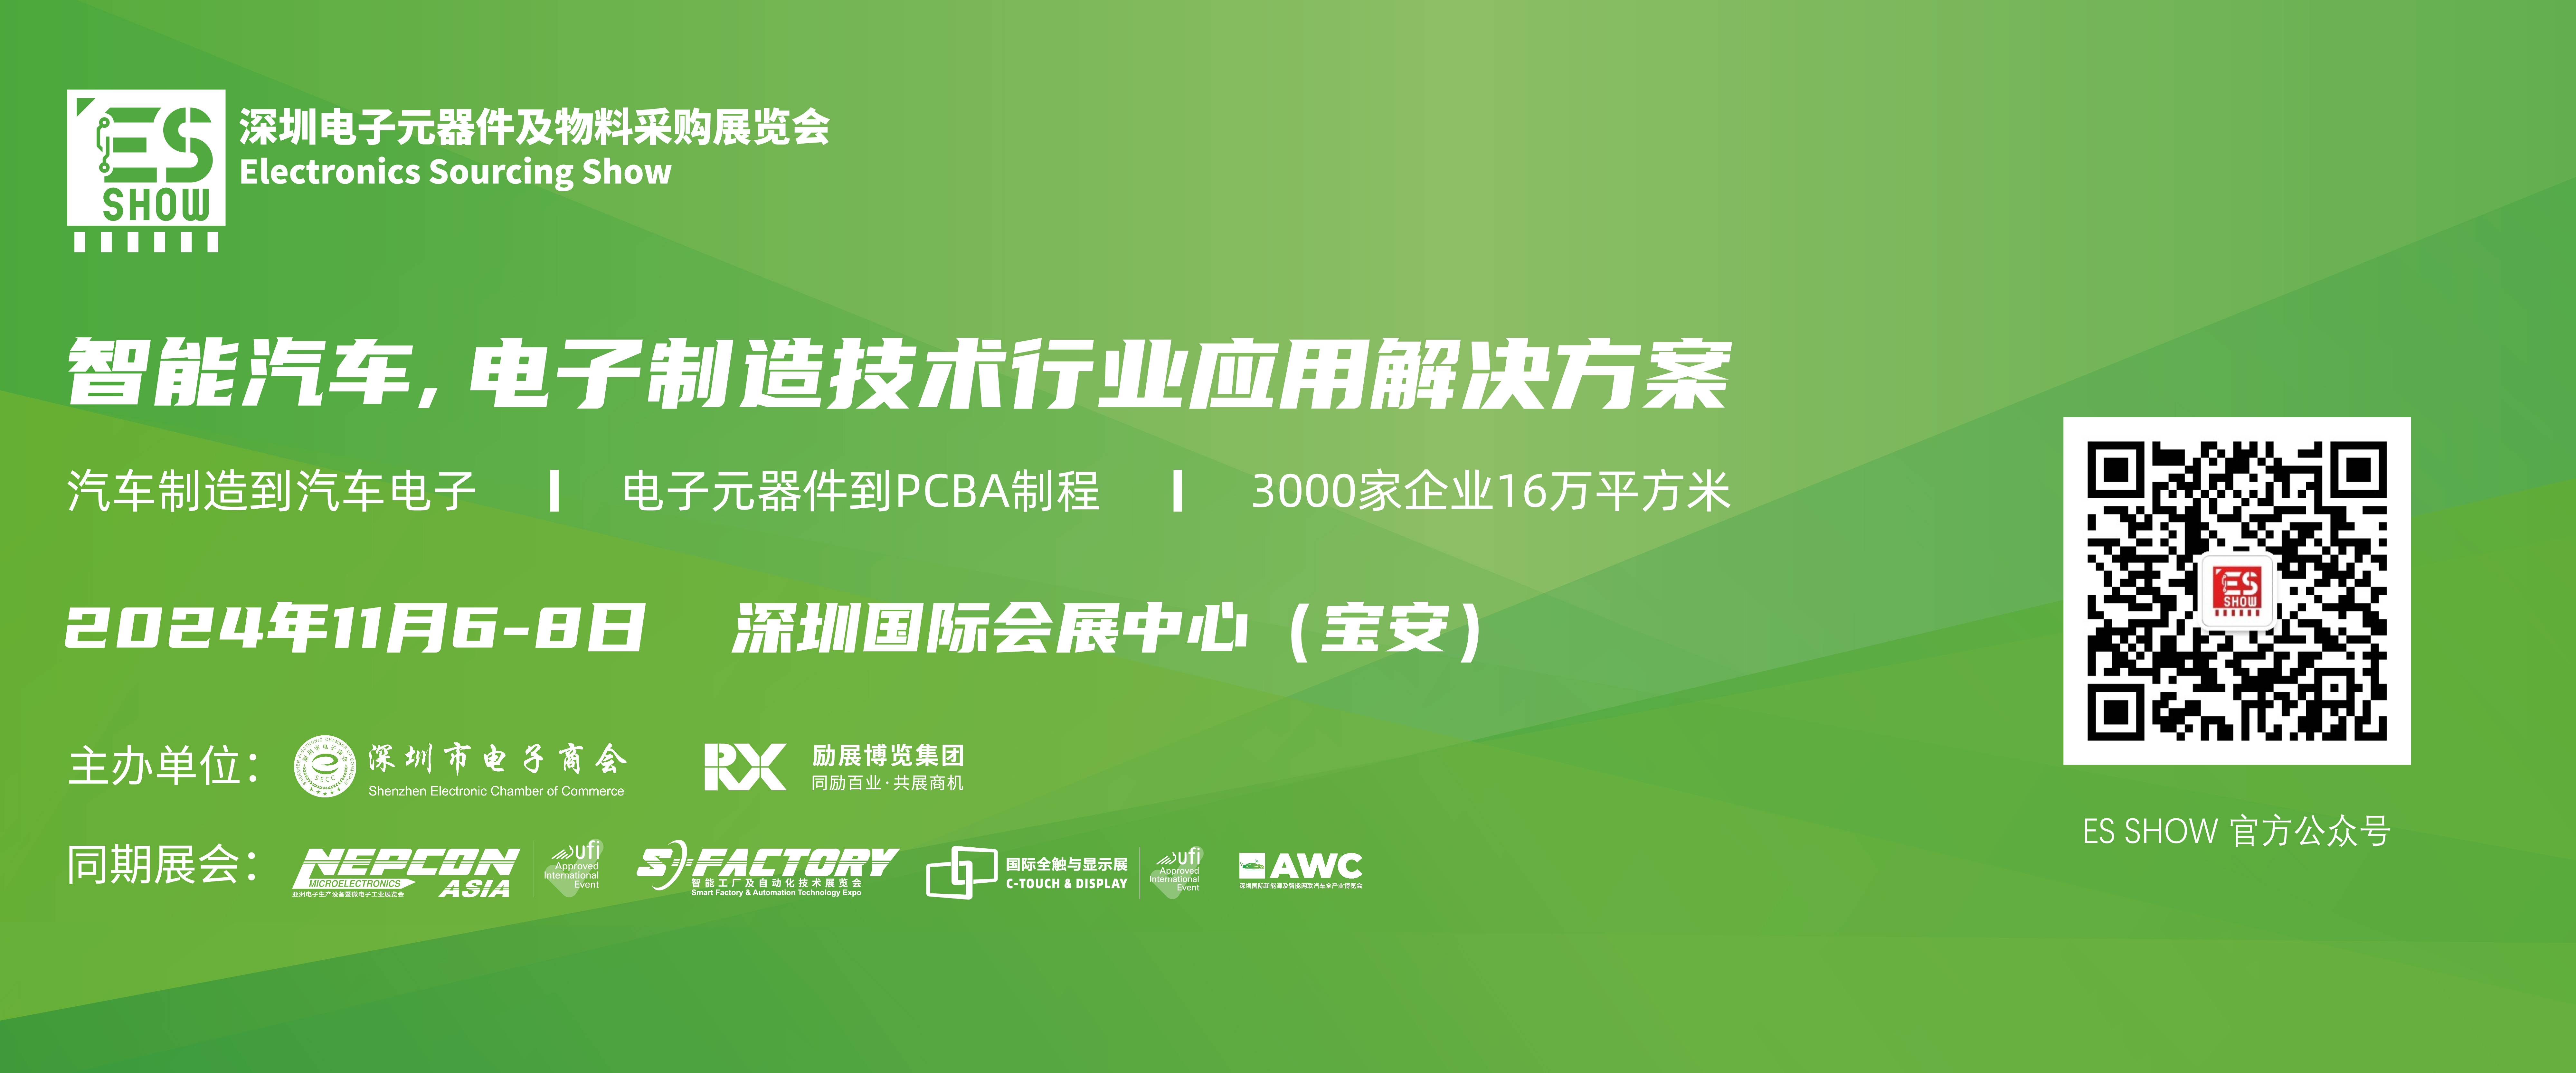 AI 深圳电子展 华南电子展 GPU 电源管理芯片 芯片